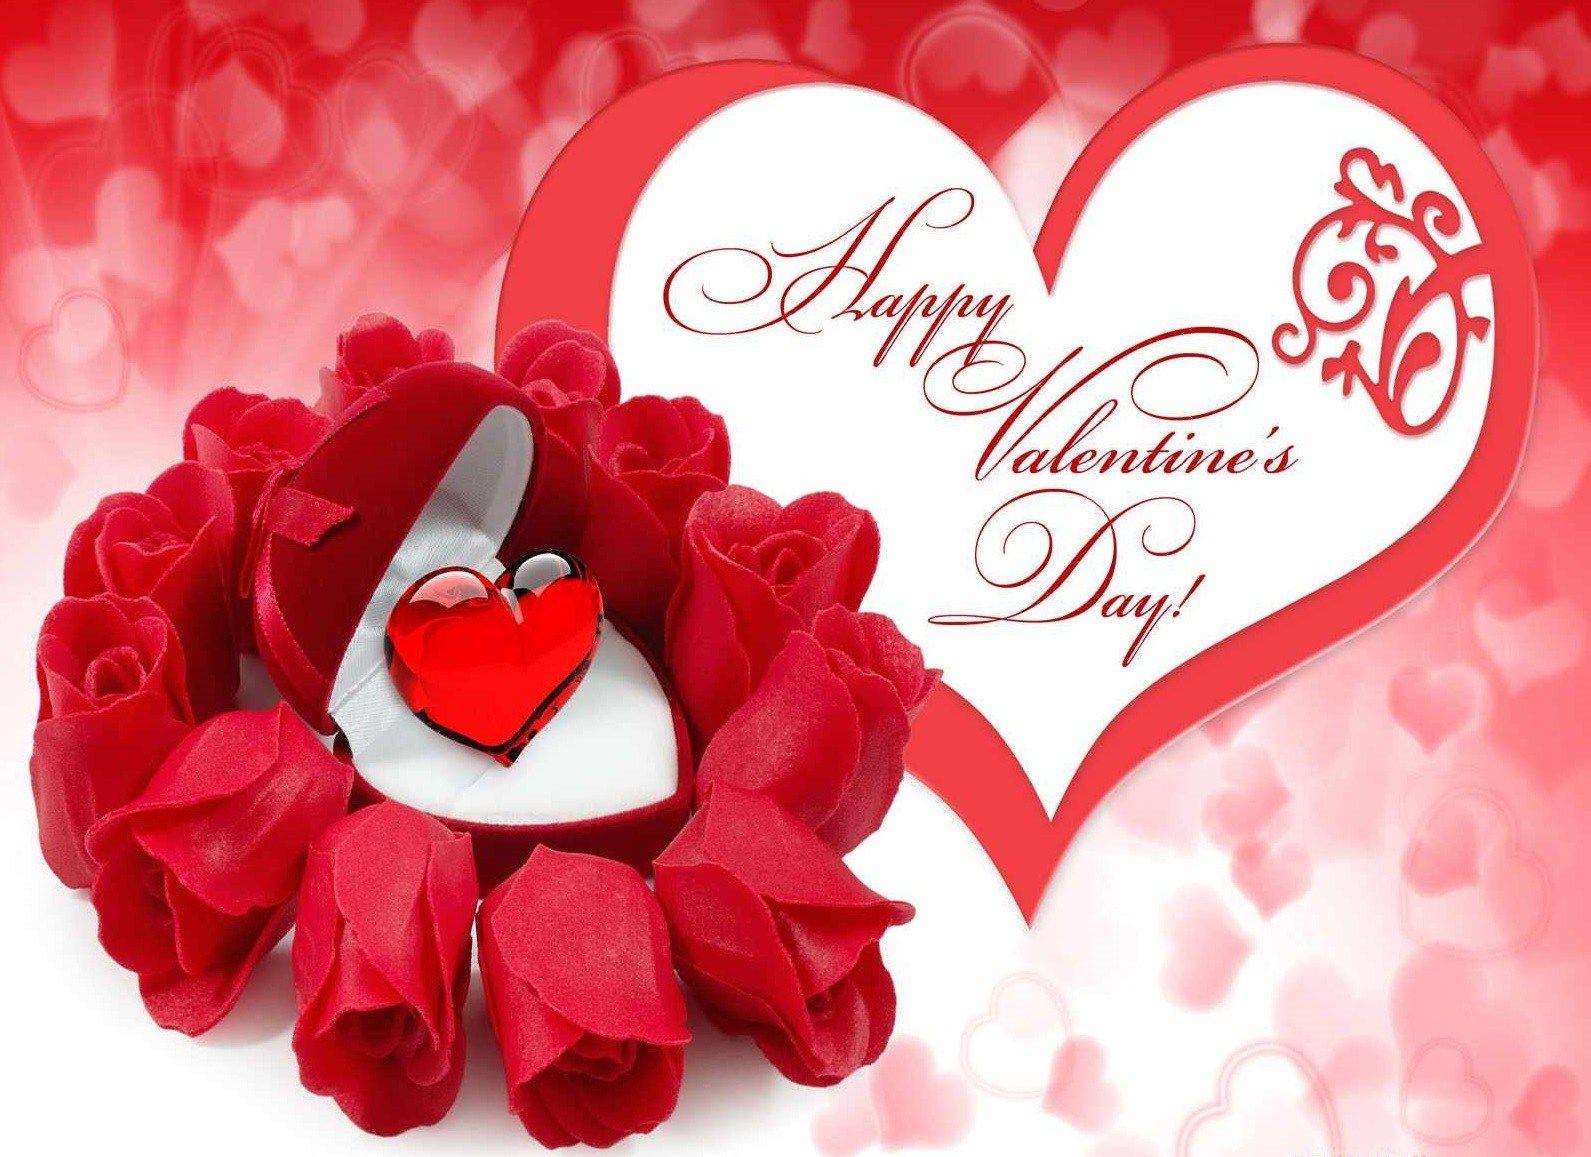 Happy Valentines Day Image, Pics, Photo & Wallpaper